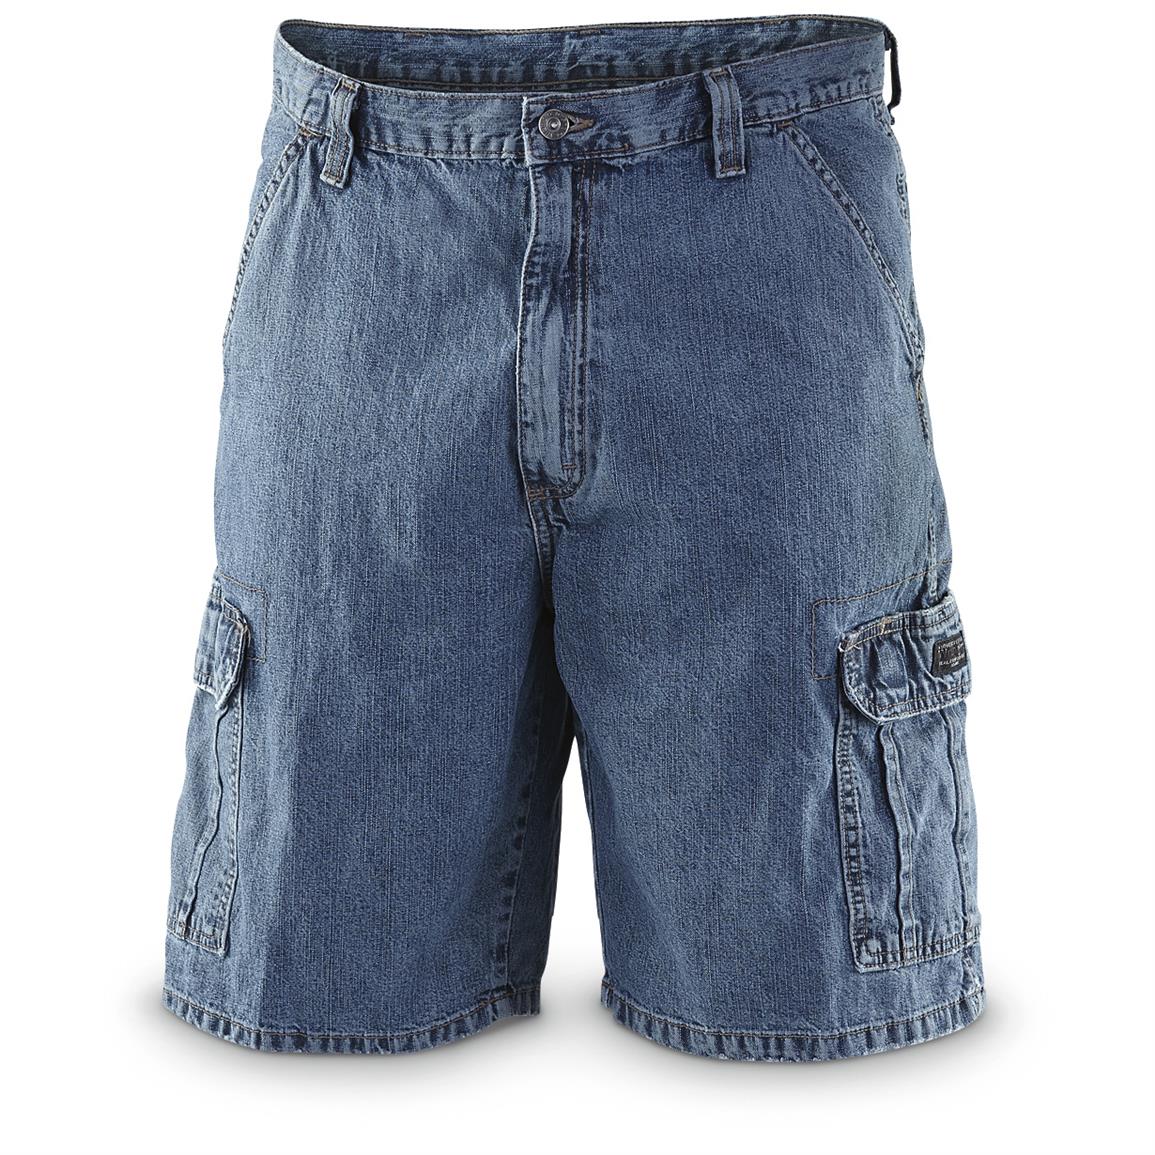 Famous Maker Men's Denim Cargo Shorts, Irregular - 641275, Shorts at